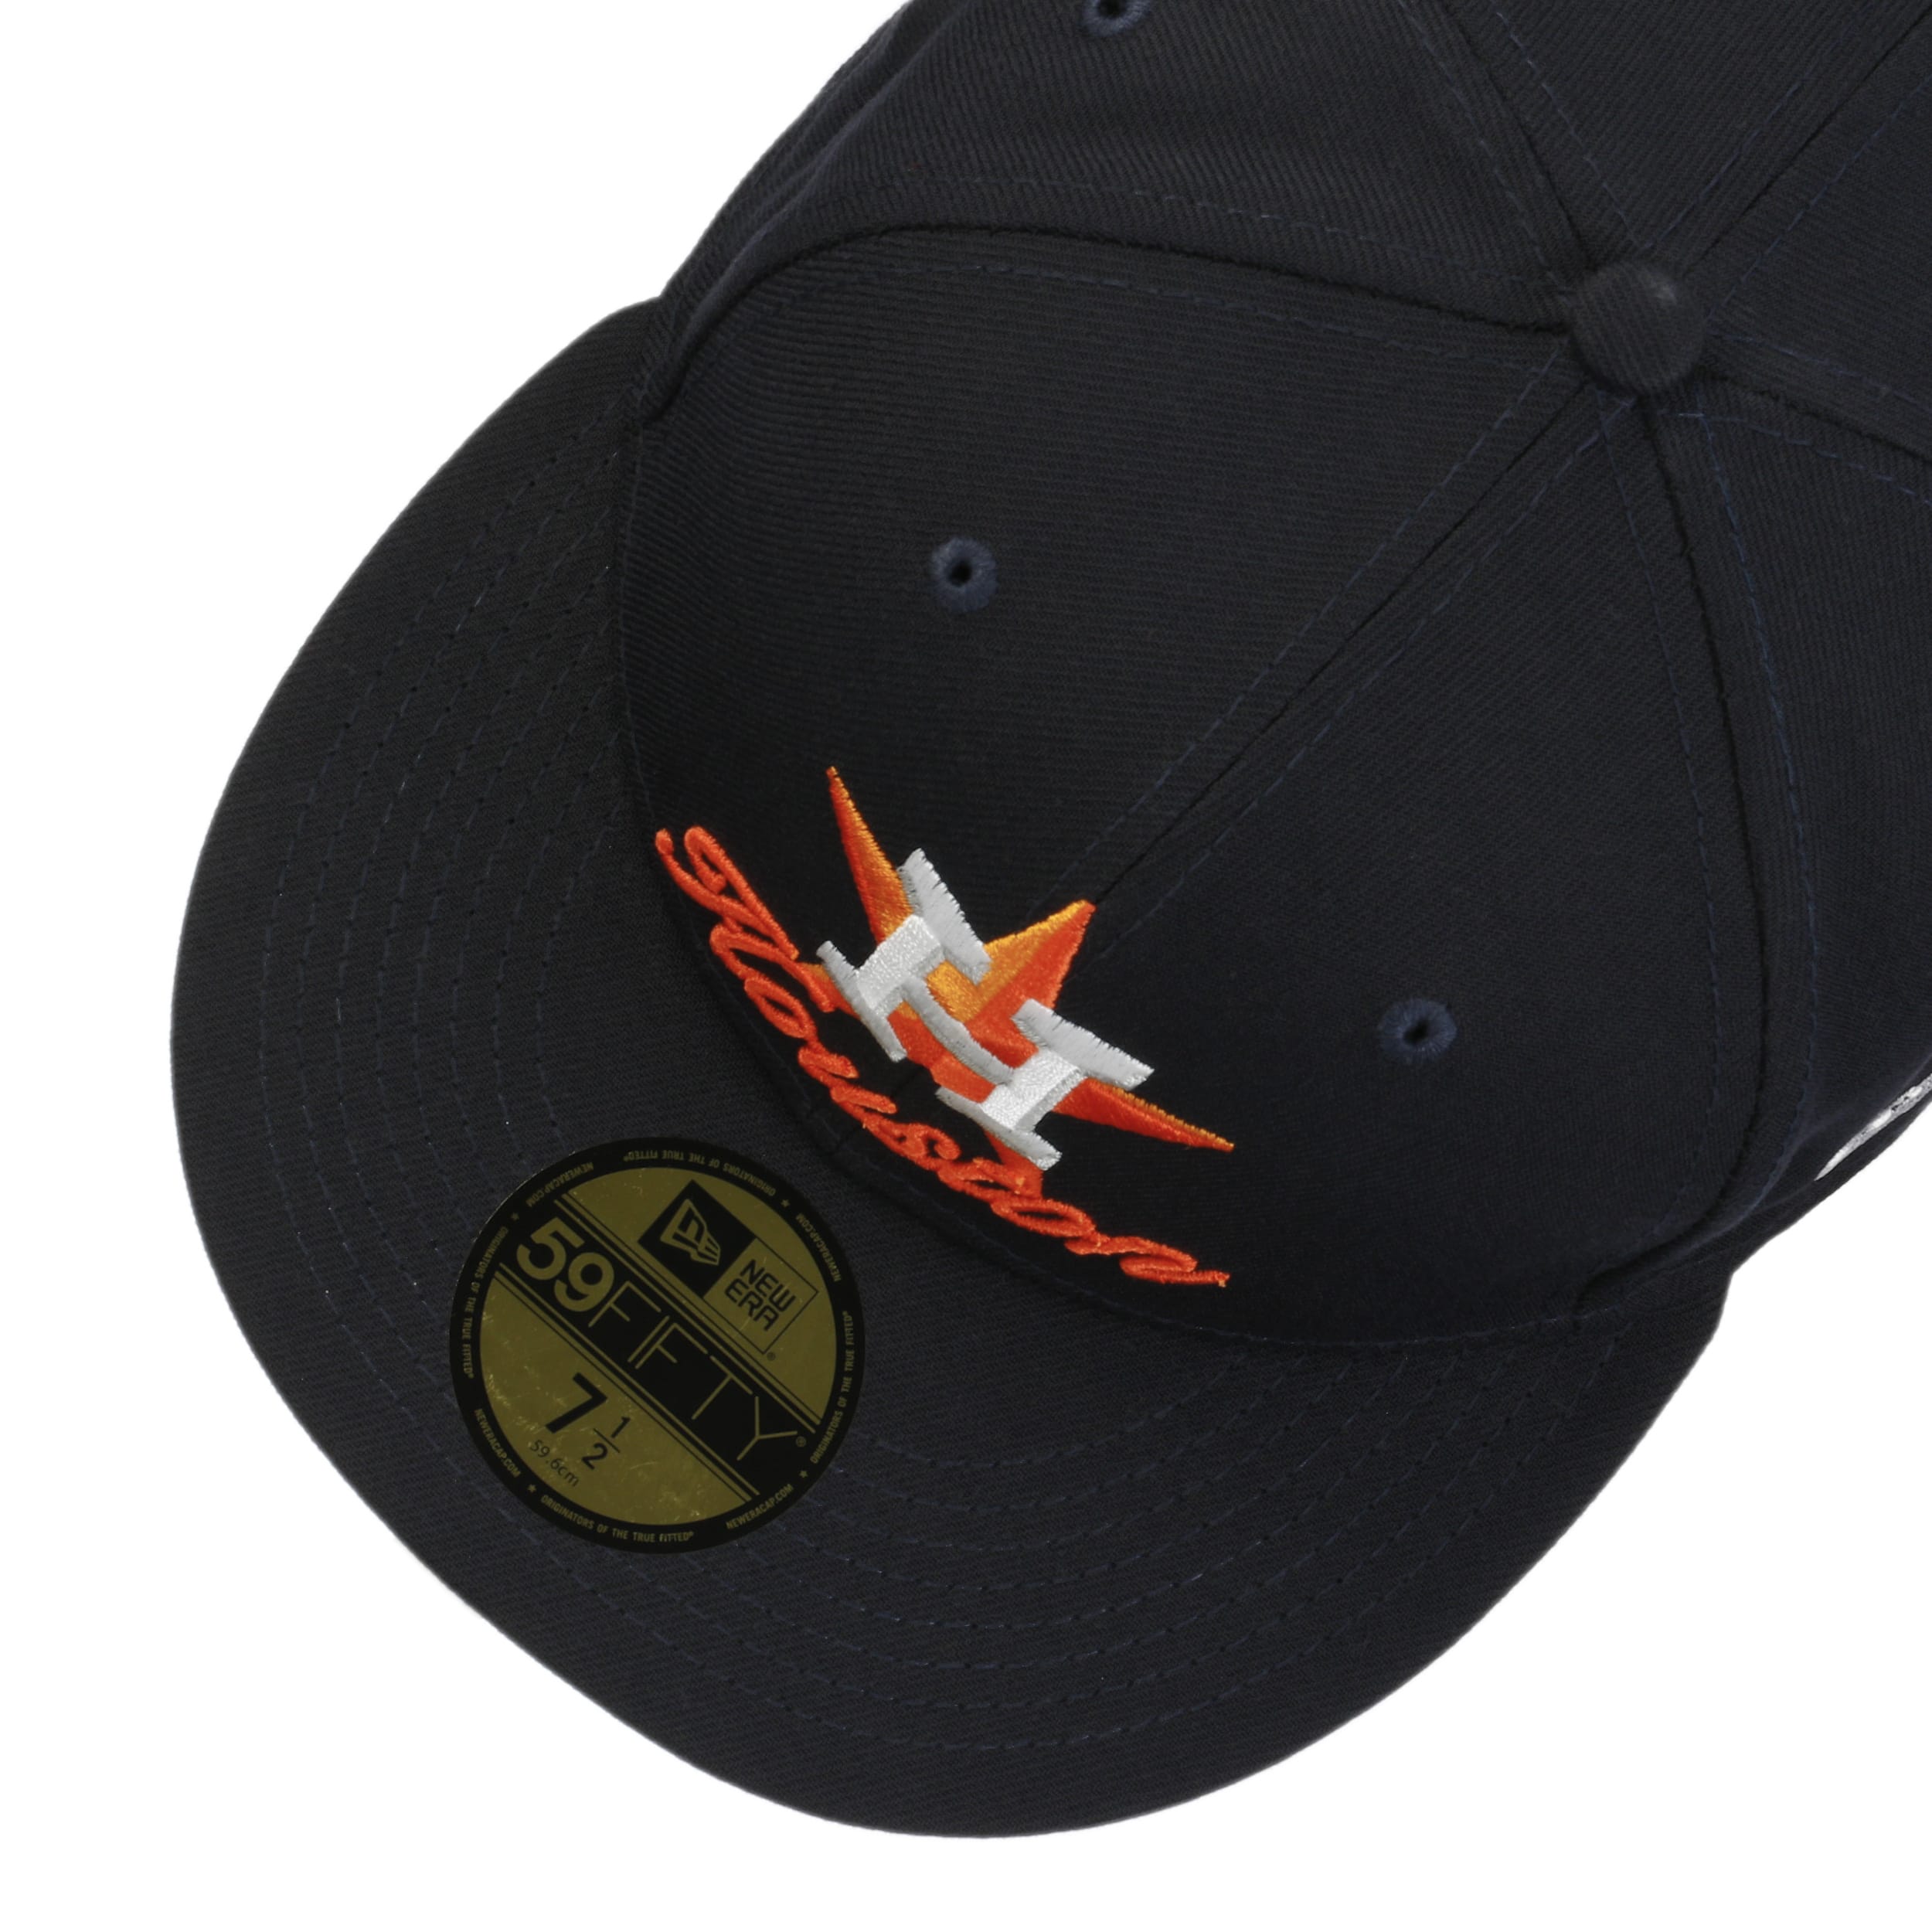 Astros Hat, Houston Astros Hats, Baseball Caps